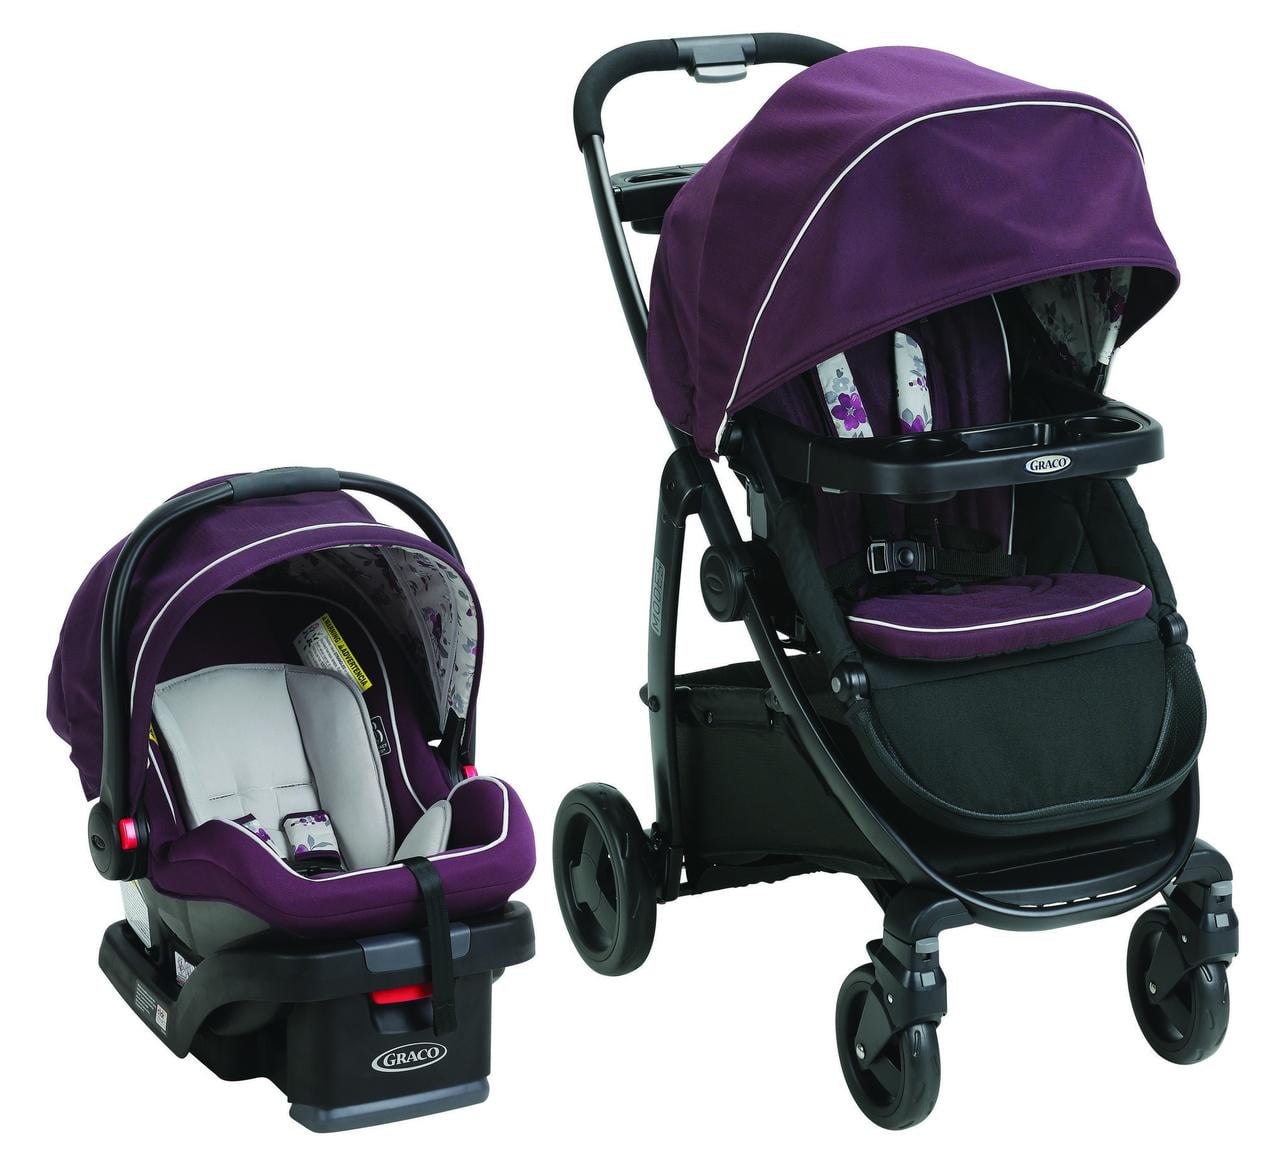 purple travel system stroller